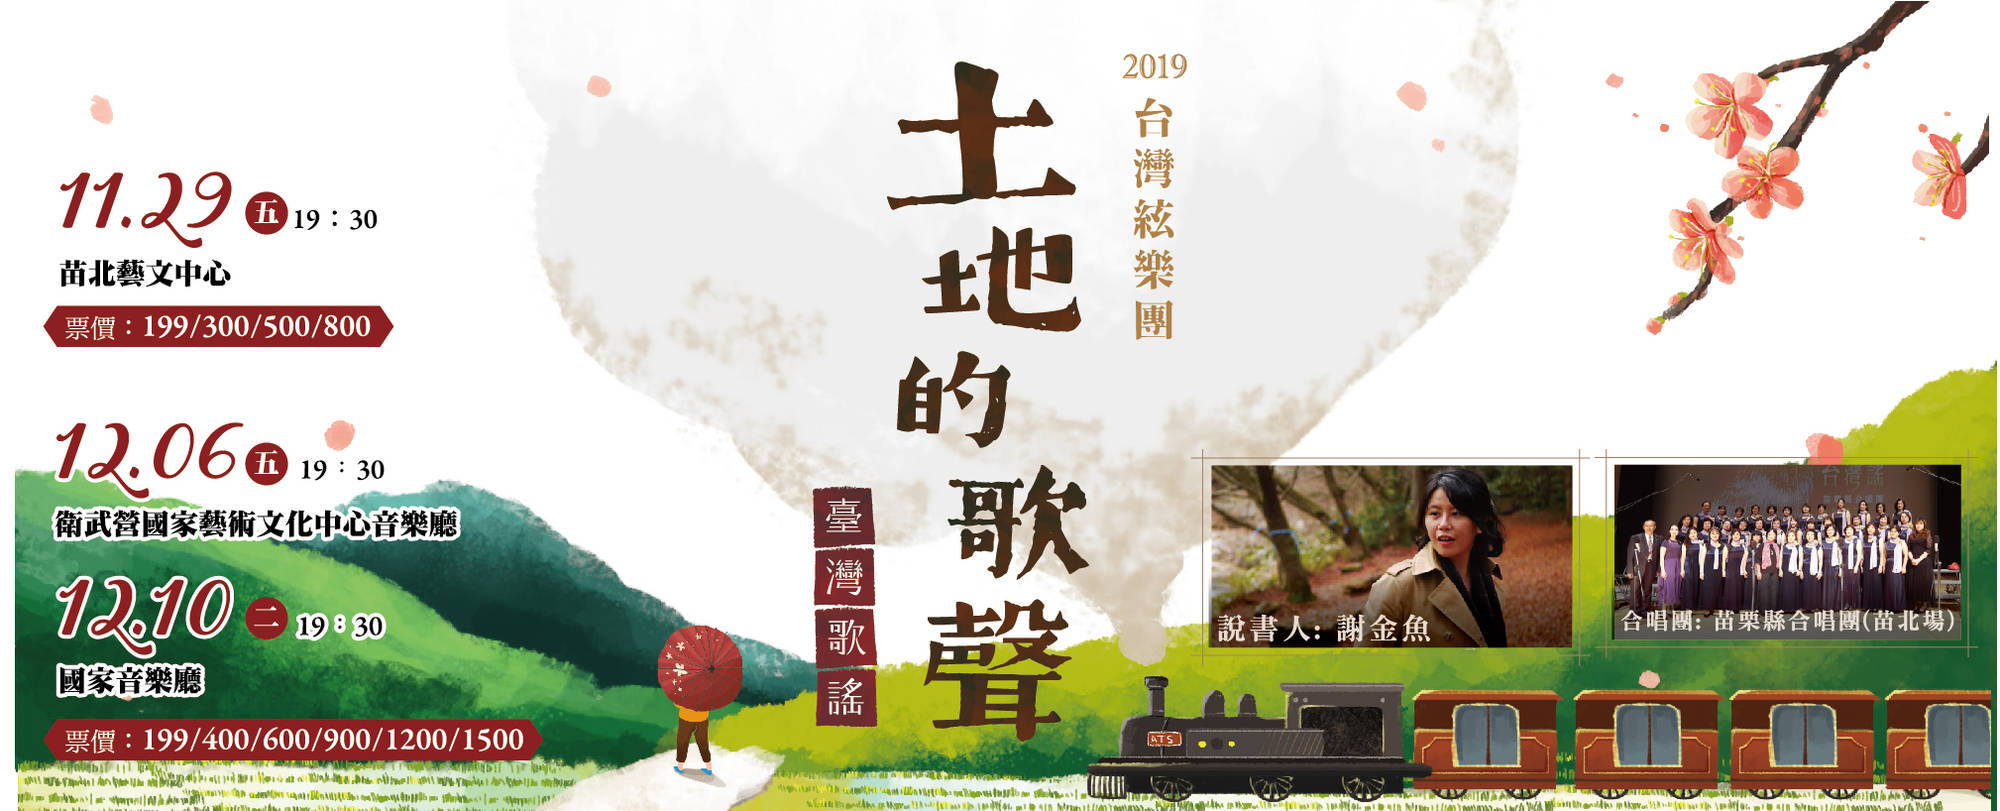 2019 Taiwan Songs